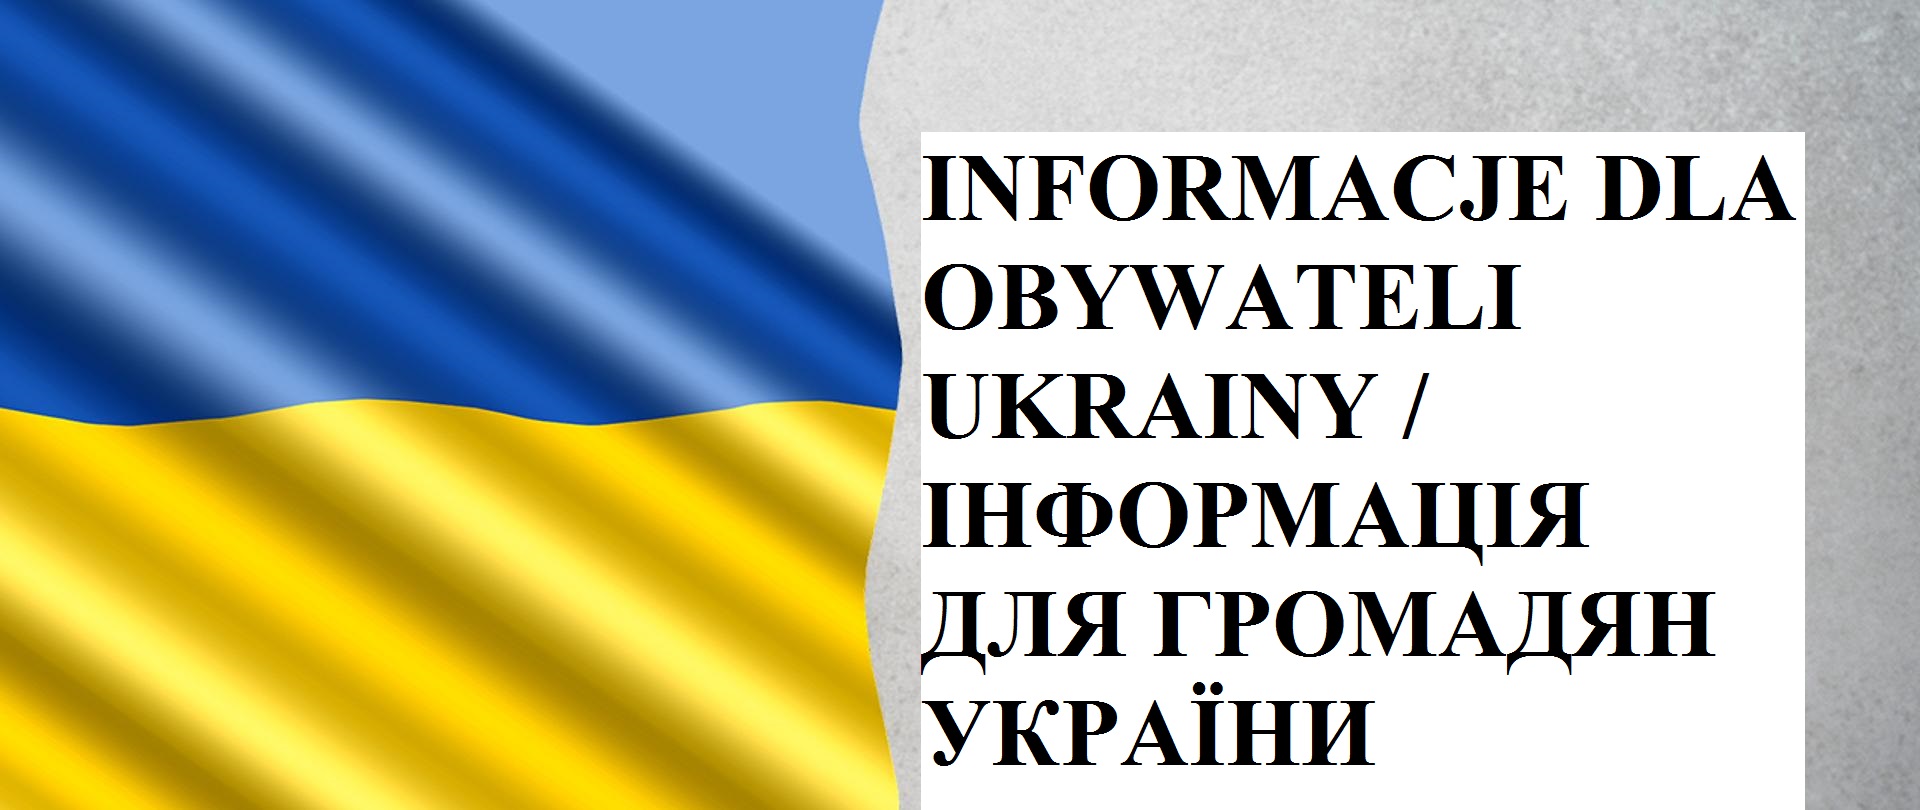 INFORMACJE DLA OBYWATELI UKRAINY / ІНФОРМАЦІЯ ДЛЯ ГРОМАДЯН УКРАЇНИ